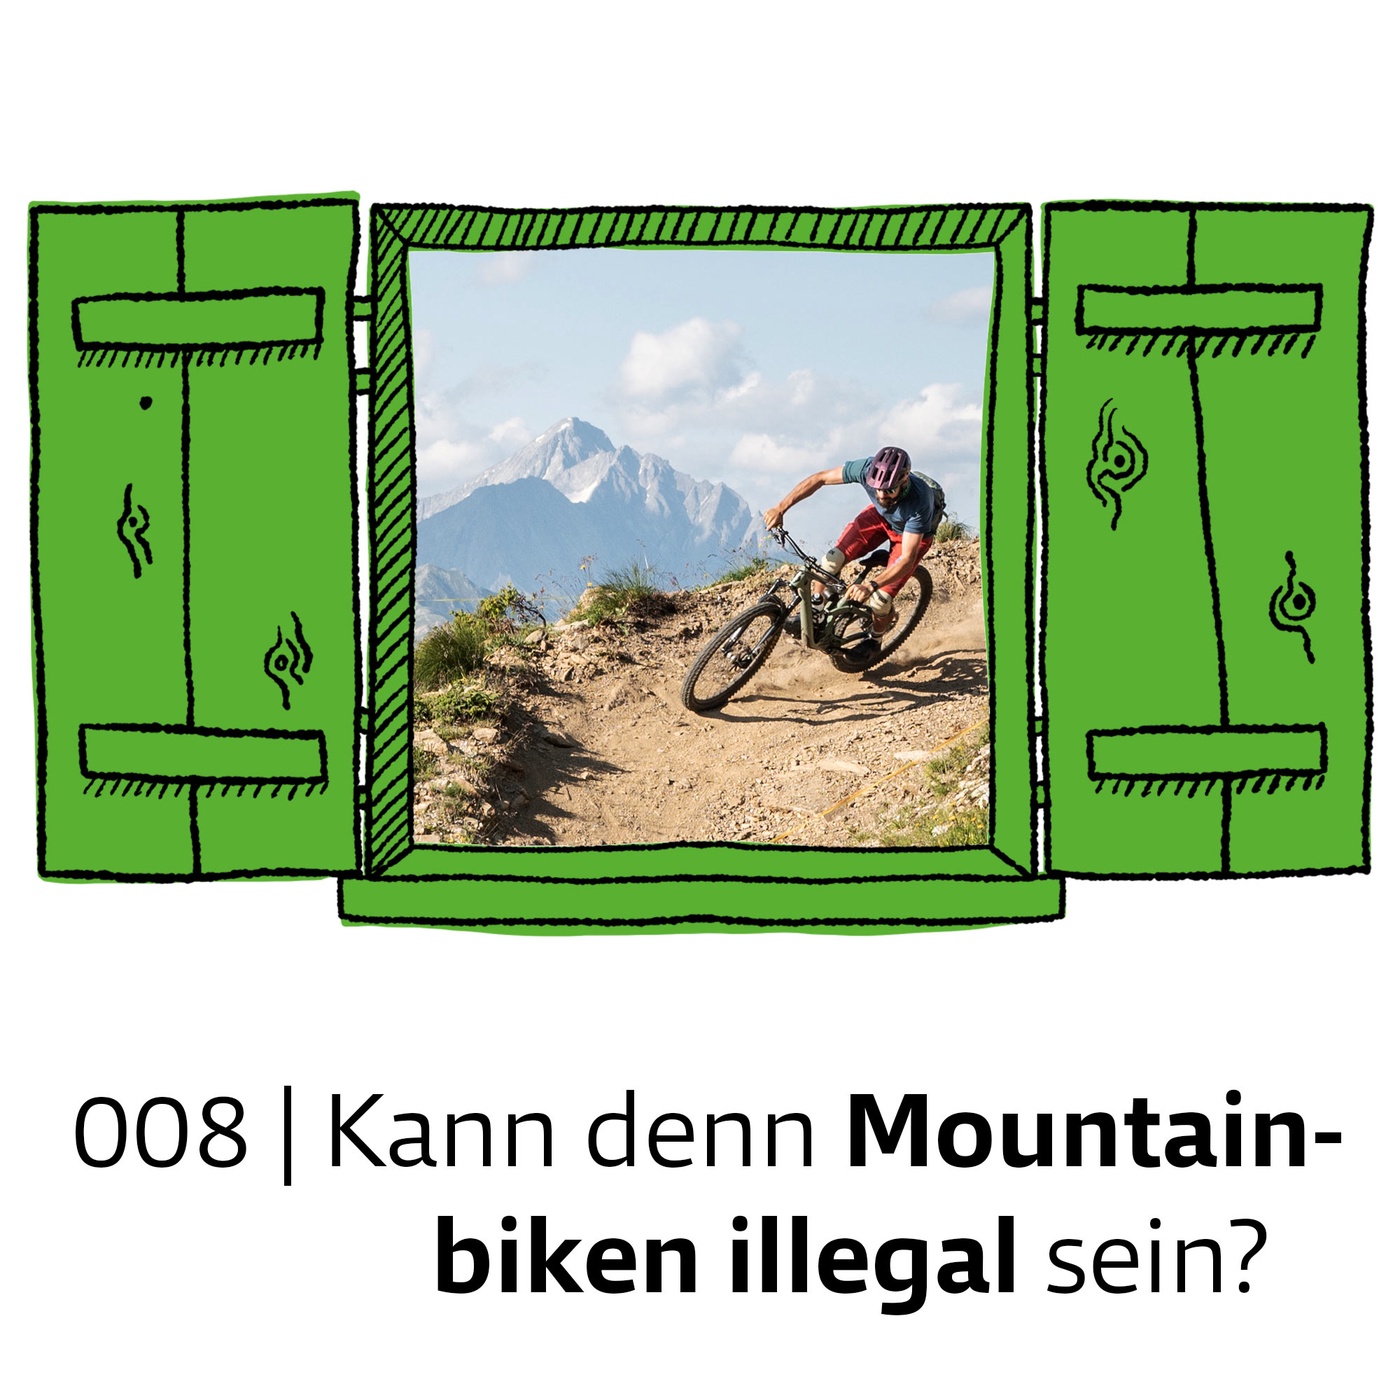 #008 Kann denn Mountainbiken illegal sein?